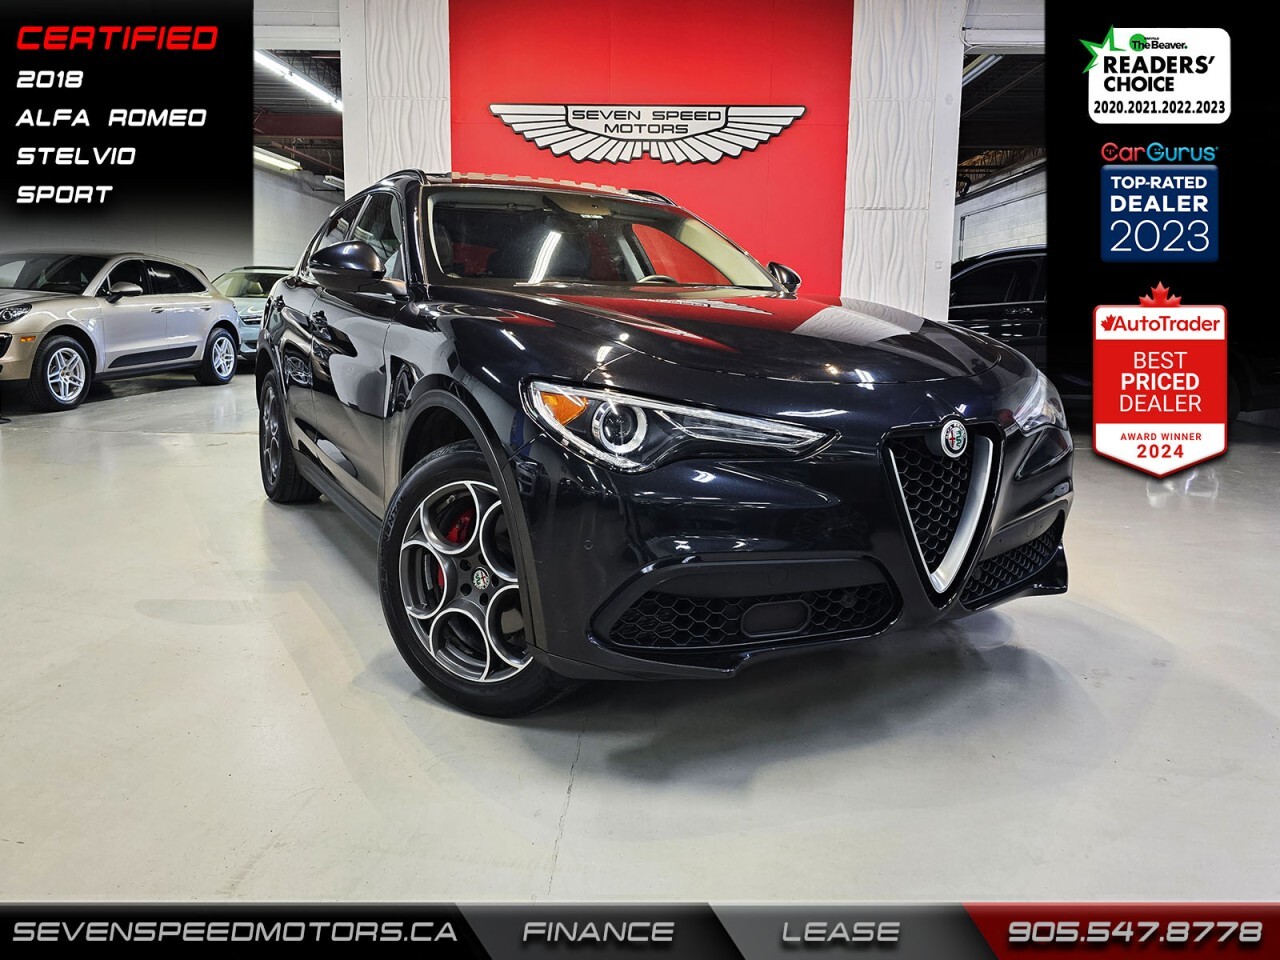 2018 Alfa Romeo Stelvio Sport/Certified/Finance